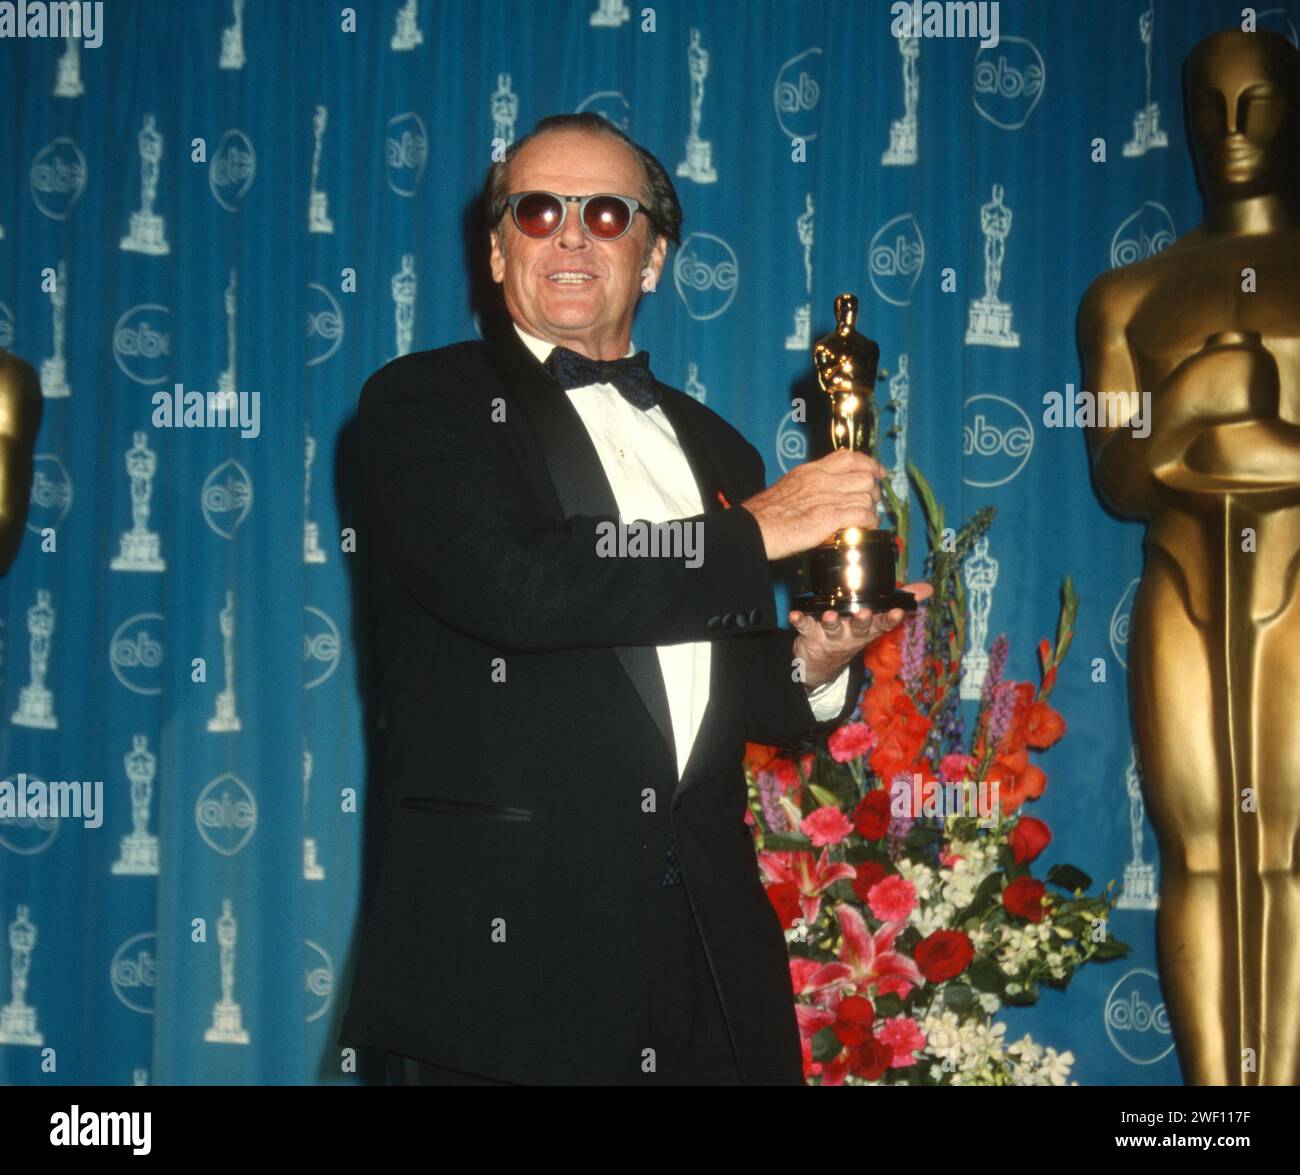 1998 Jack Nicholson Wins Oscar for as Good as it gets John Barrett/PHOTOlink.net Stock Photo